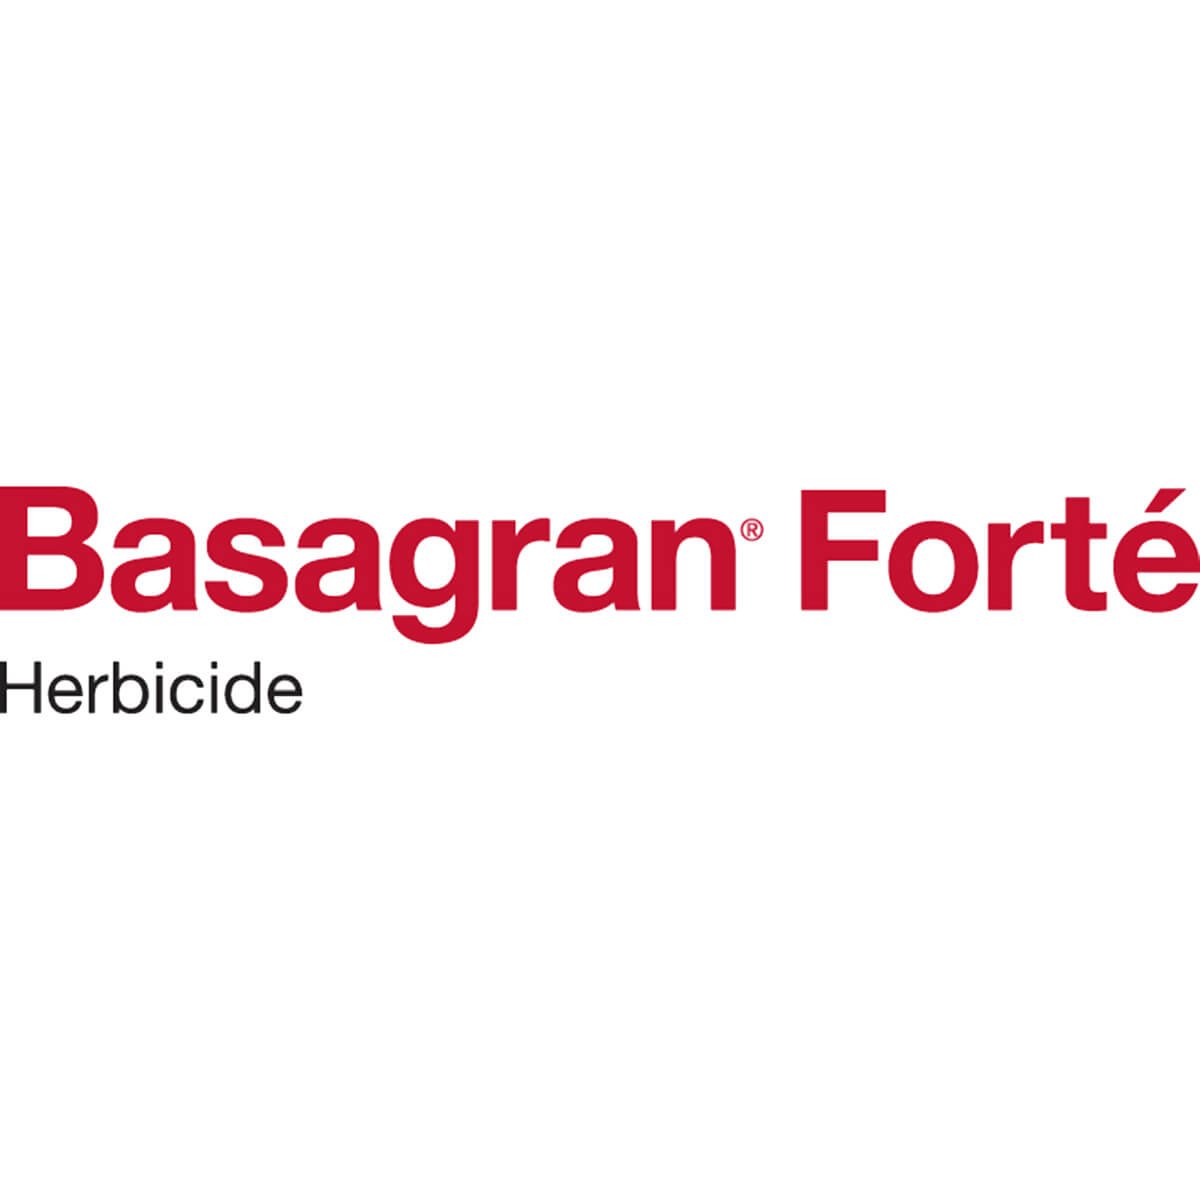 Basagran® Forte Herbicide - 10 L Jug